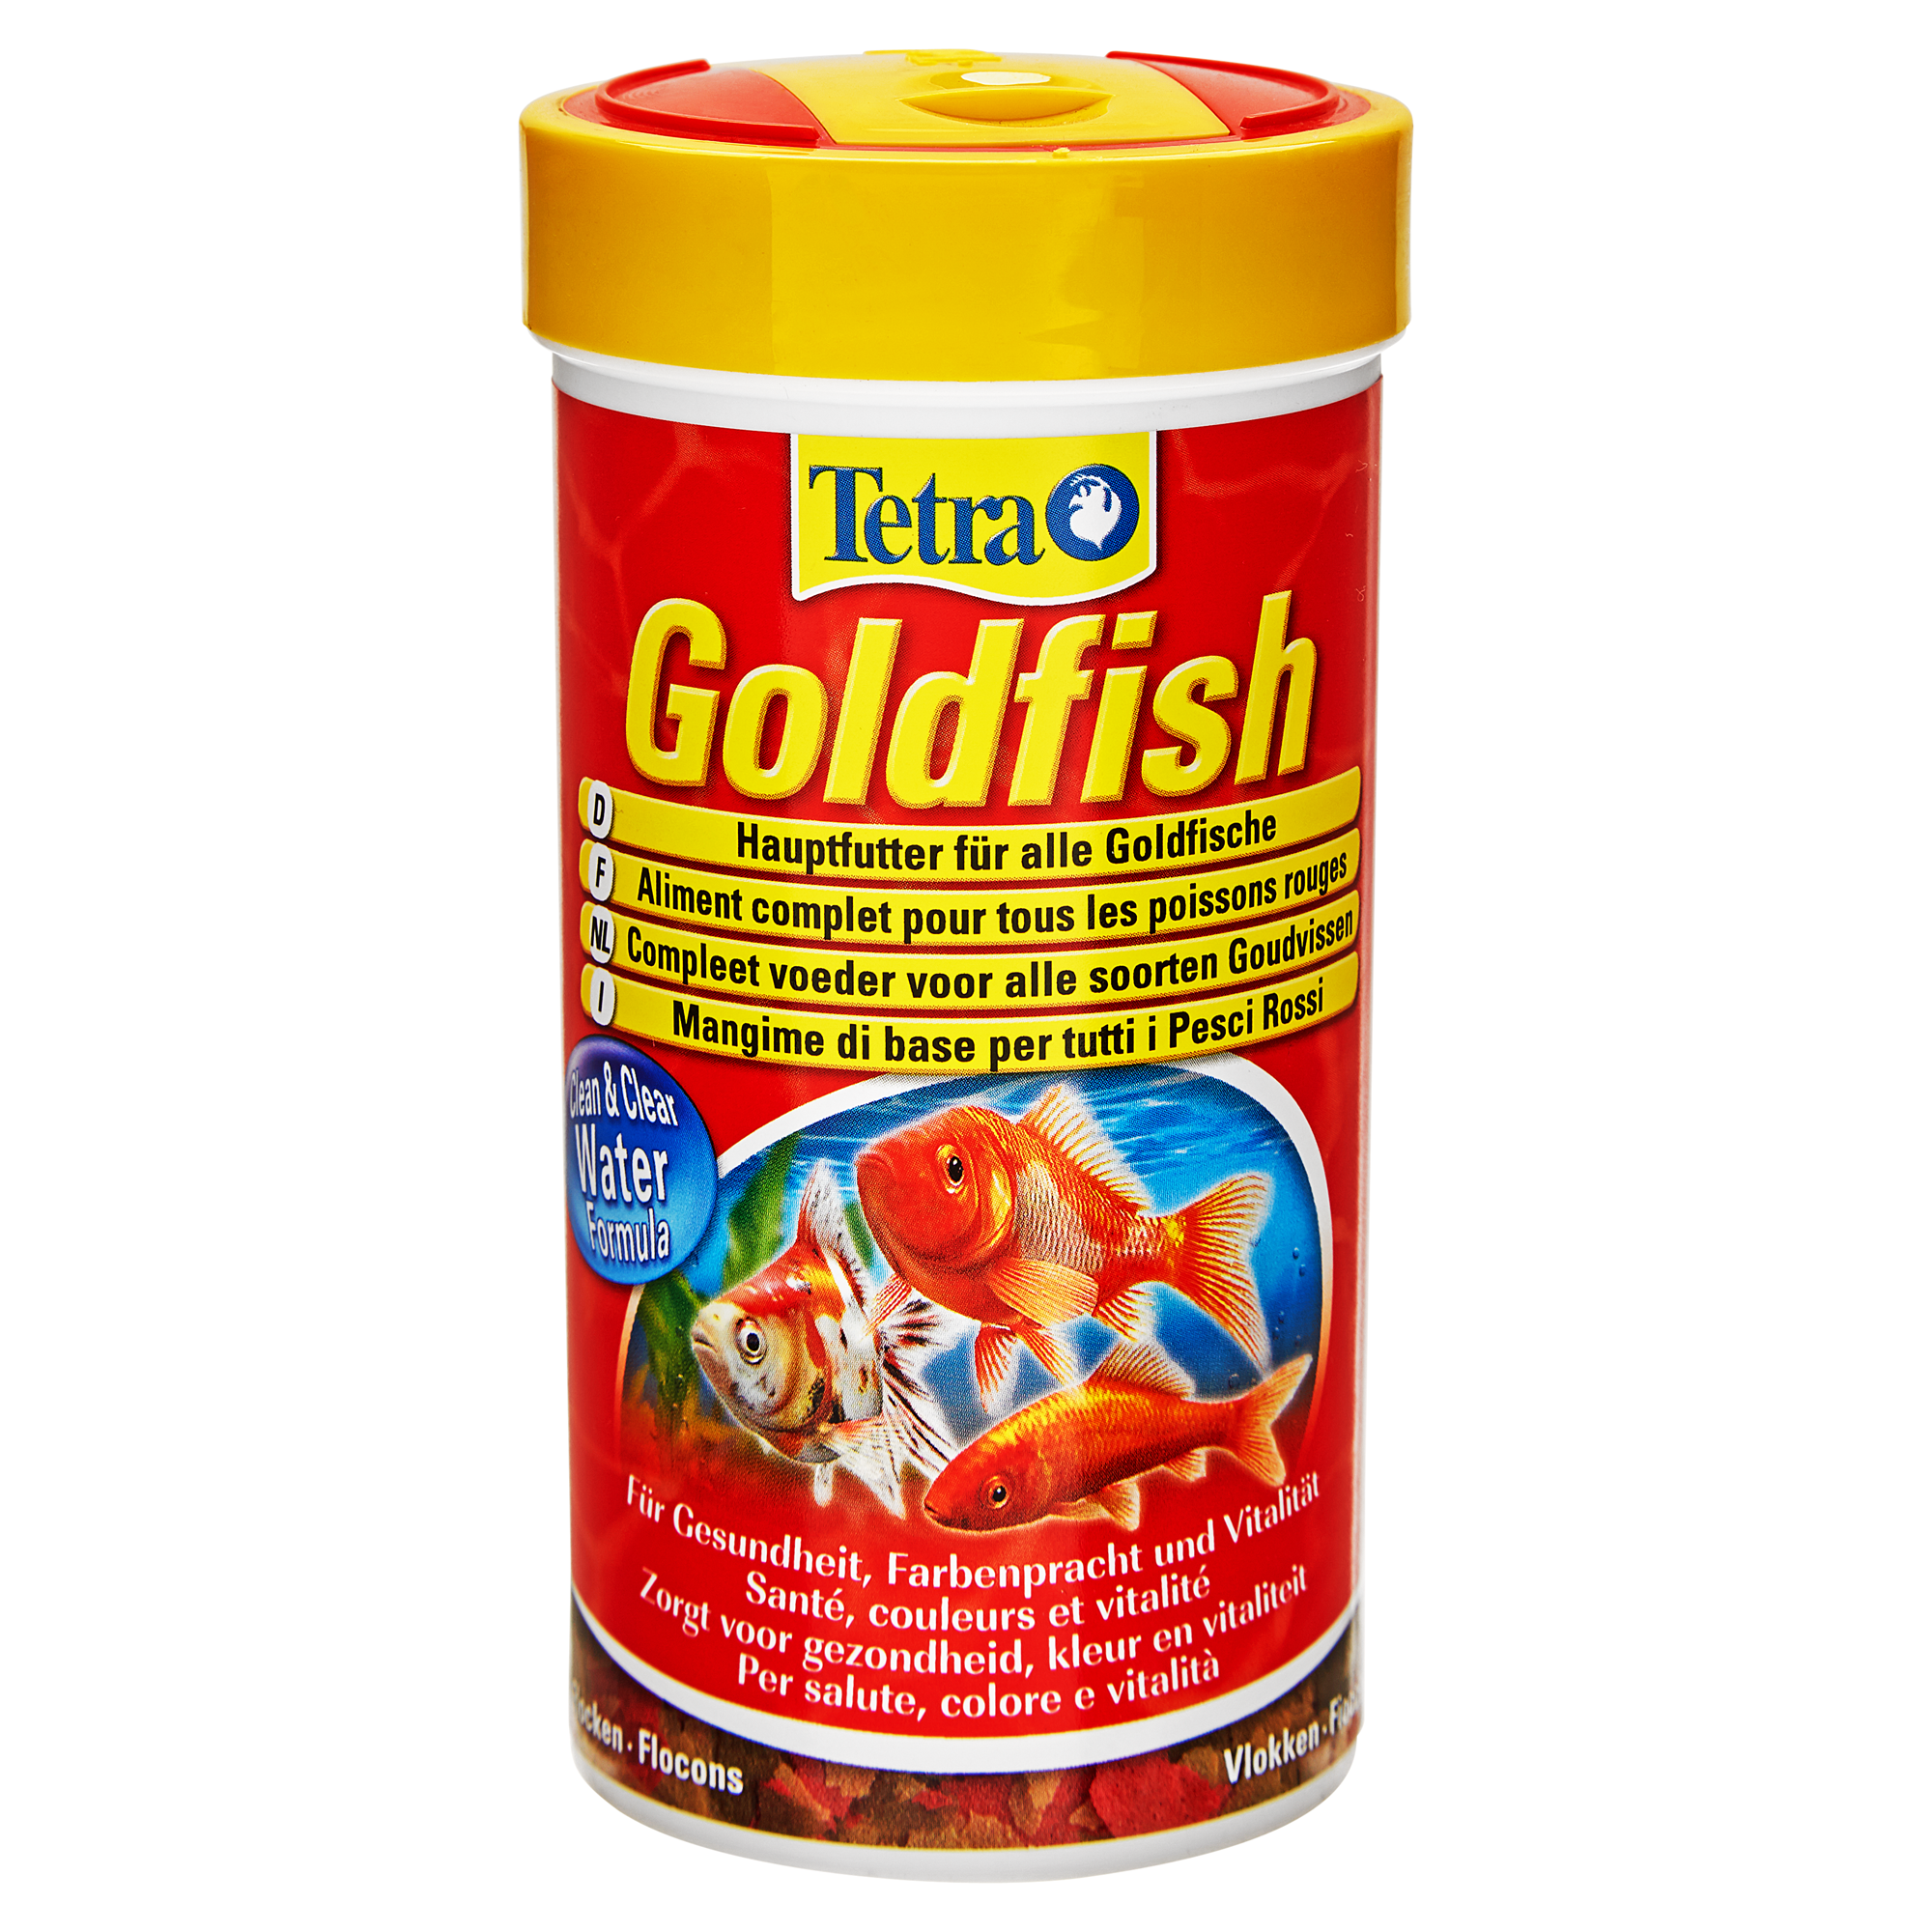 Fischfutter "Goldfisch" 52 g + product picture